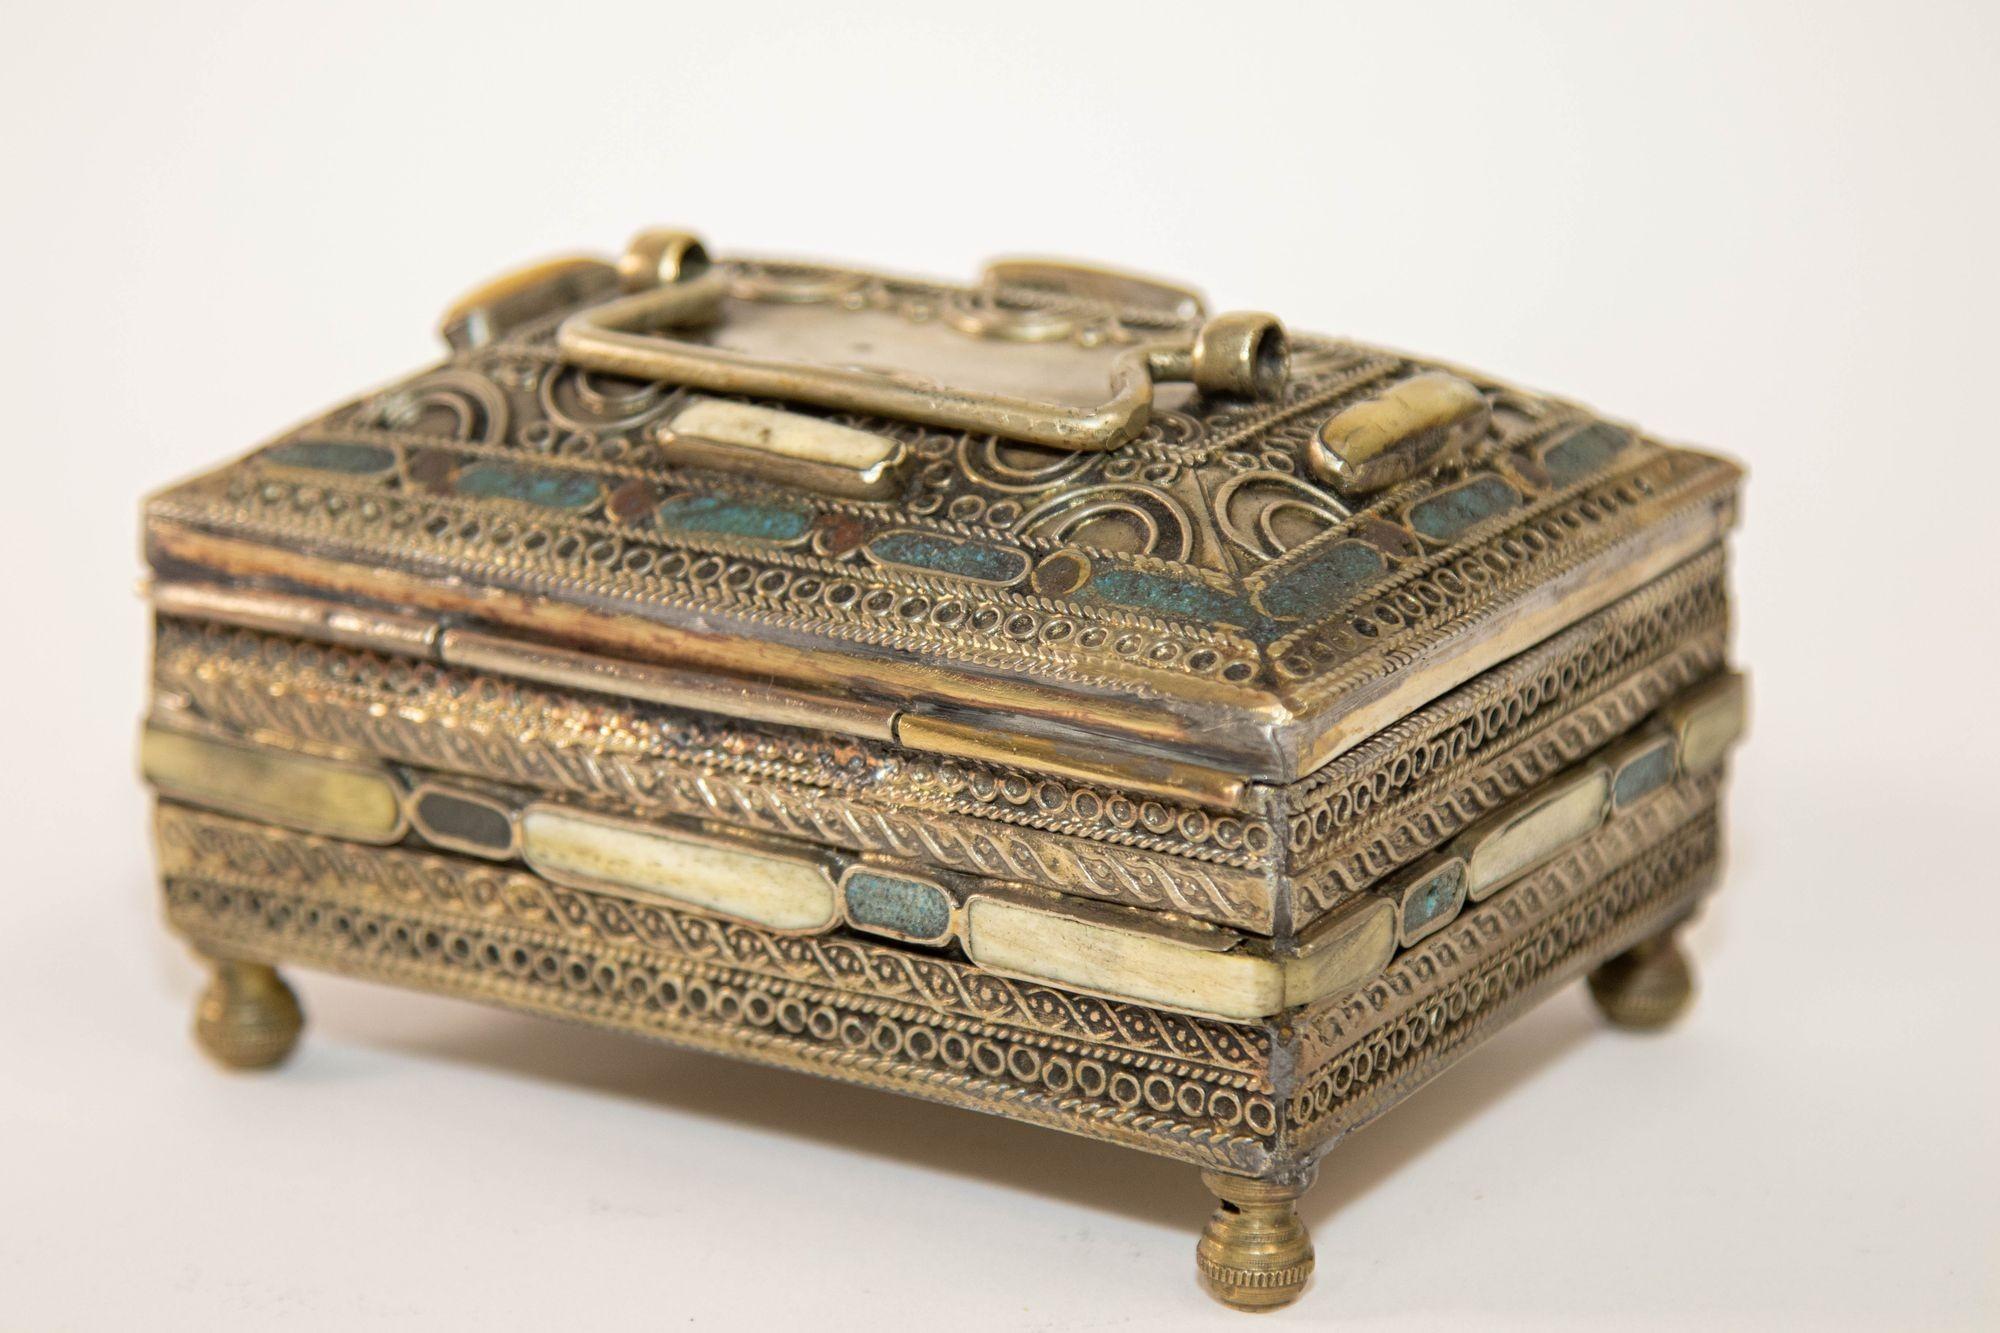 Hand-Crafted Toledo Spain Silvered Brass and Enamel Jewelry Box Islamic Moorish Style 1940s